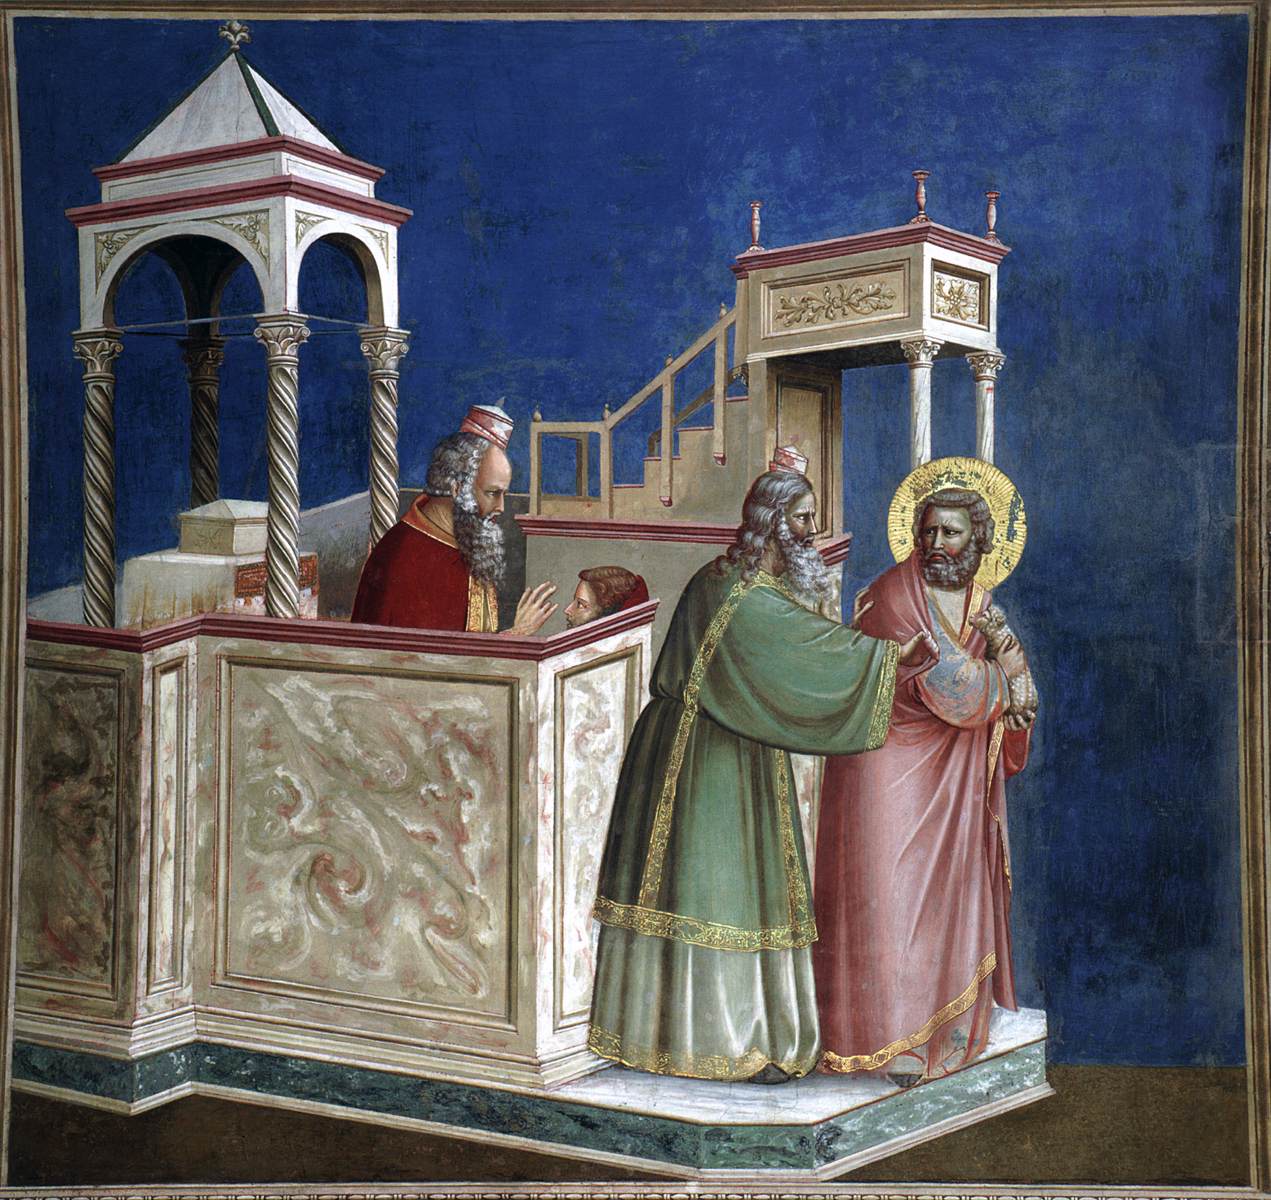 Giotto, Expulsion of Joachim (1304-1306; fresco; Padua, Scrovegni Chapel)